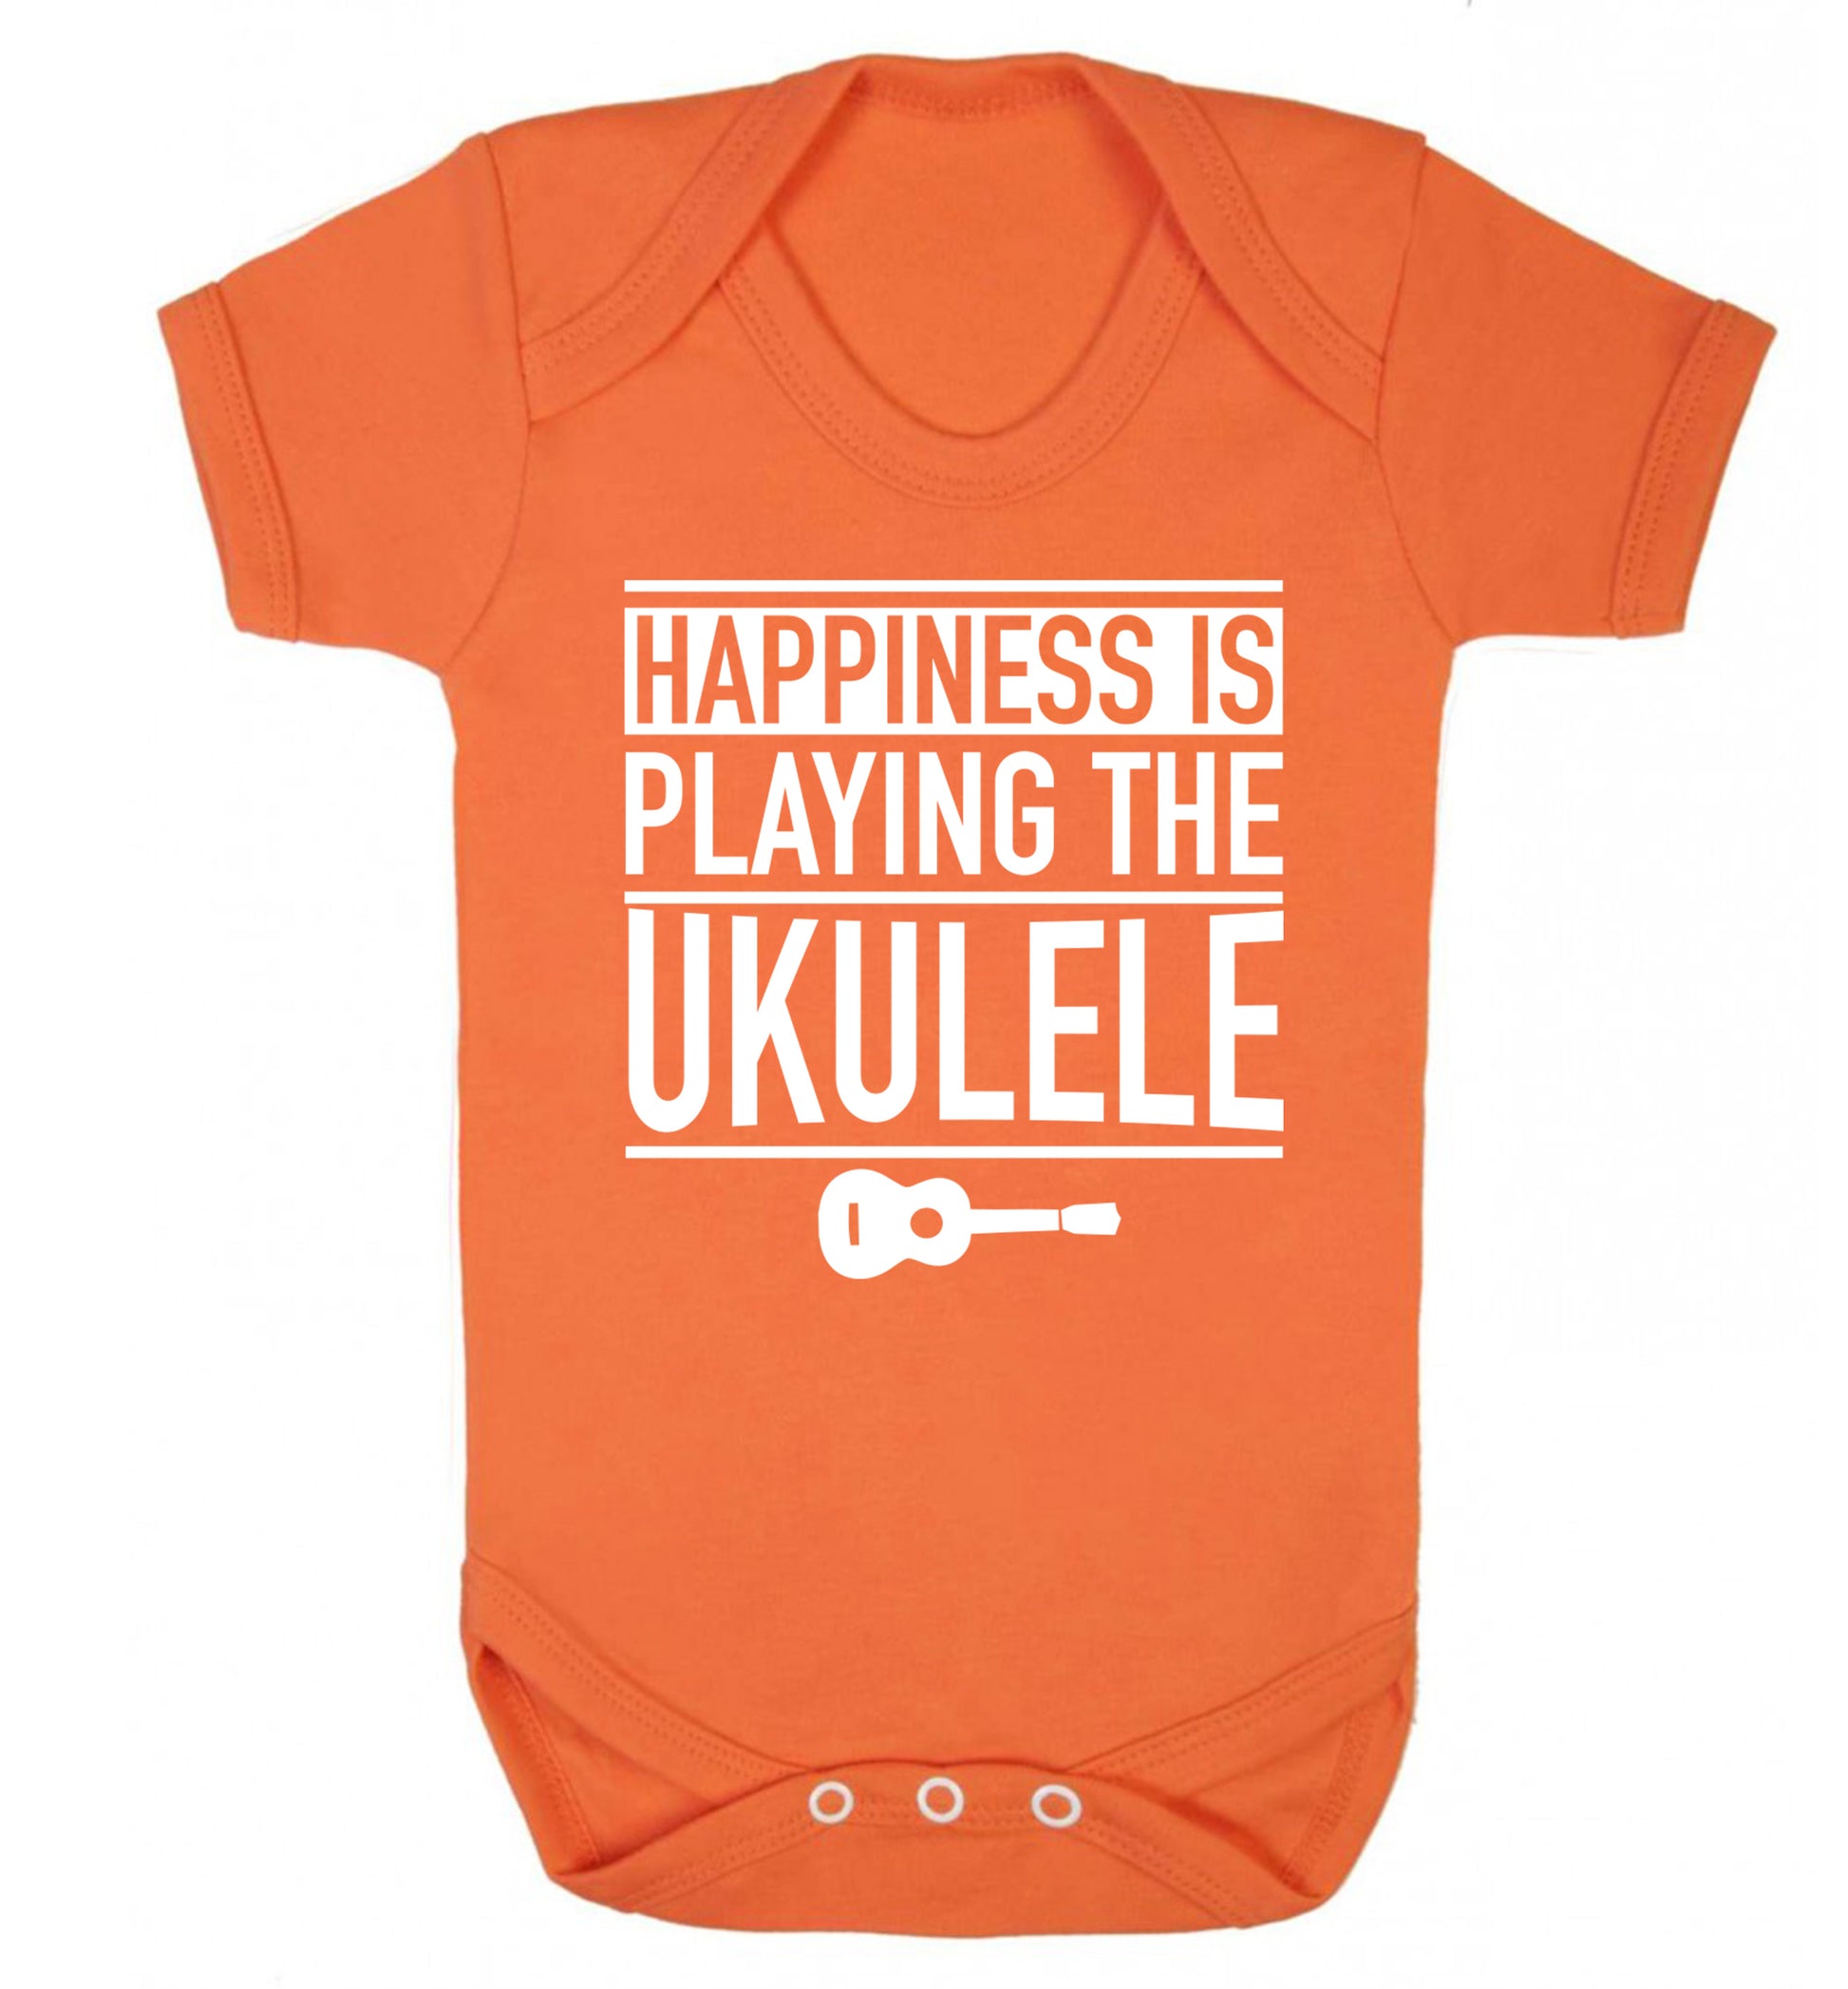 Happines is playing the ukulele Baby Vest orange 18-24 months